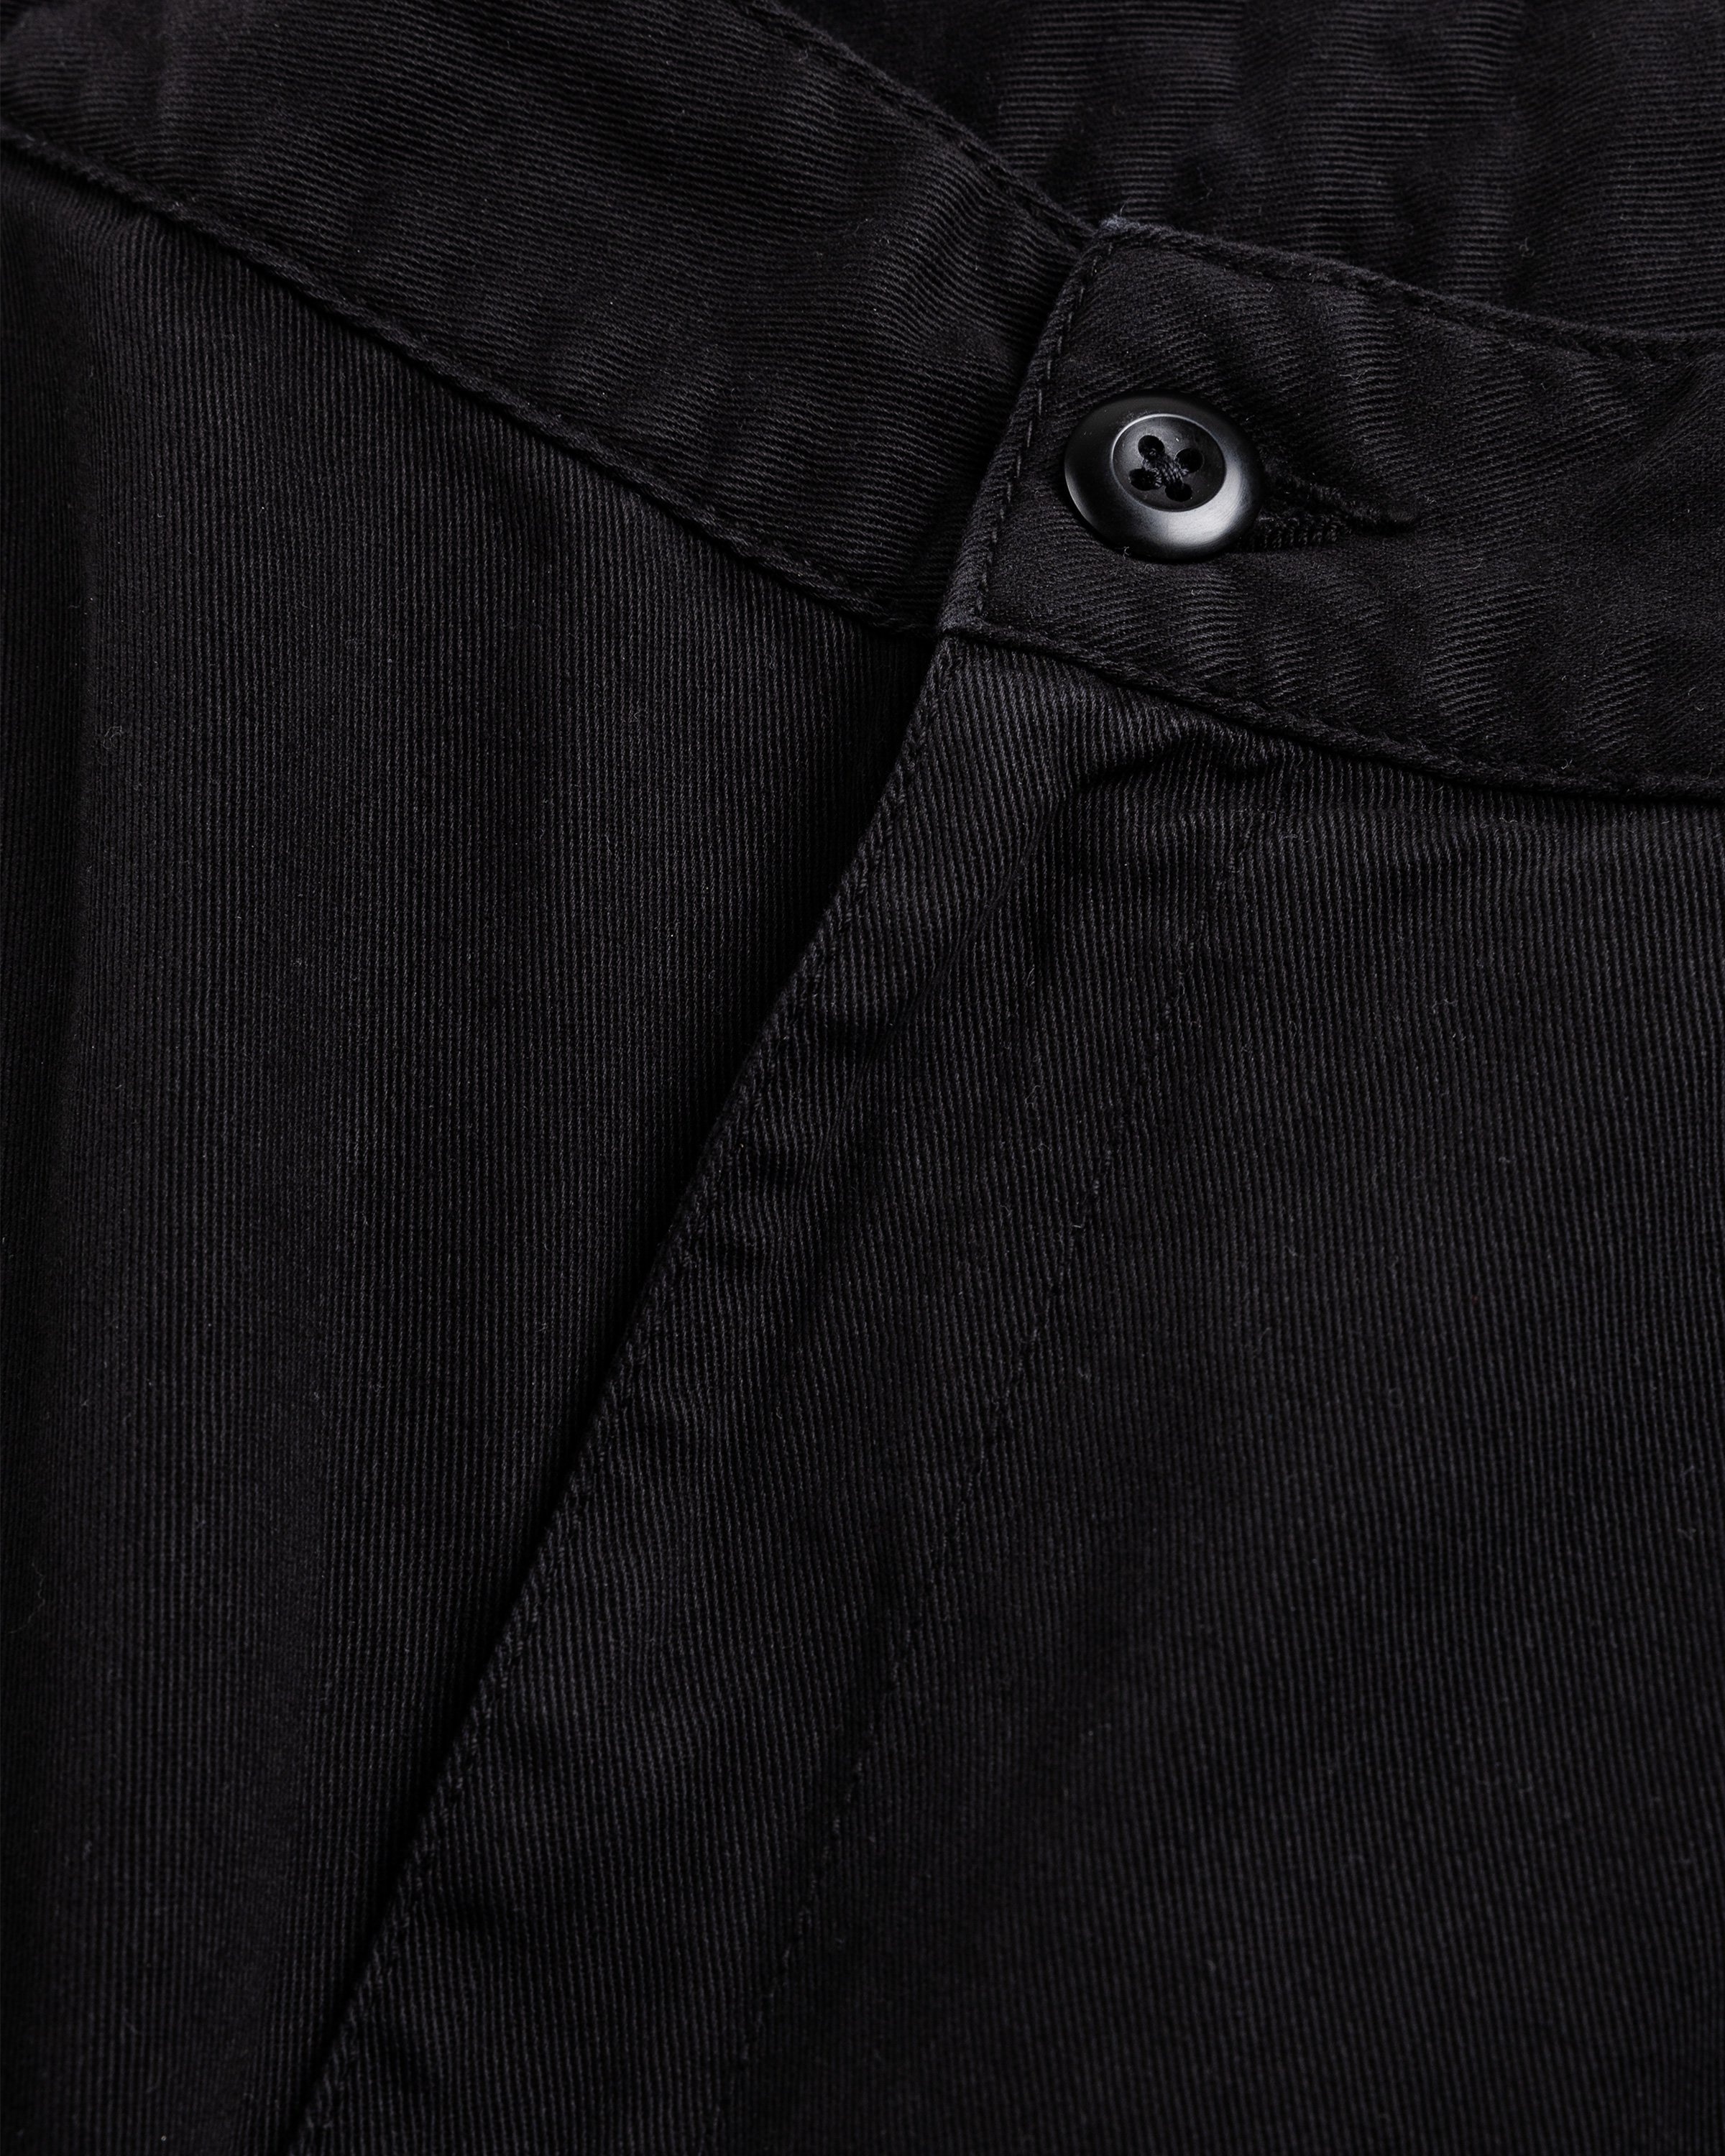 Carhartt WIP – Cole Cargo Short Black - Cargo Shorts - Black - Image 4